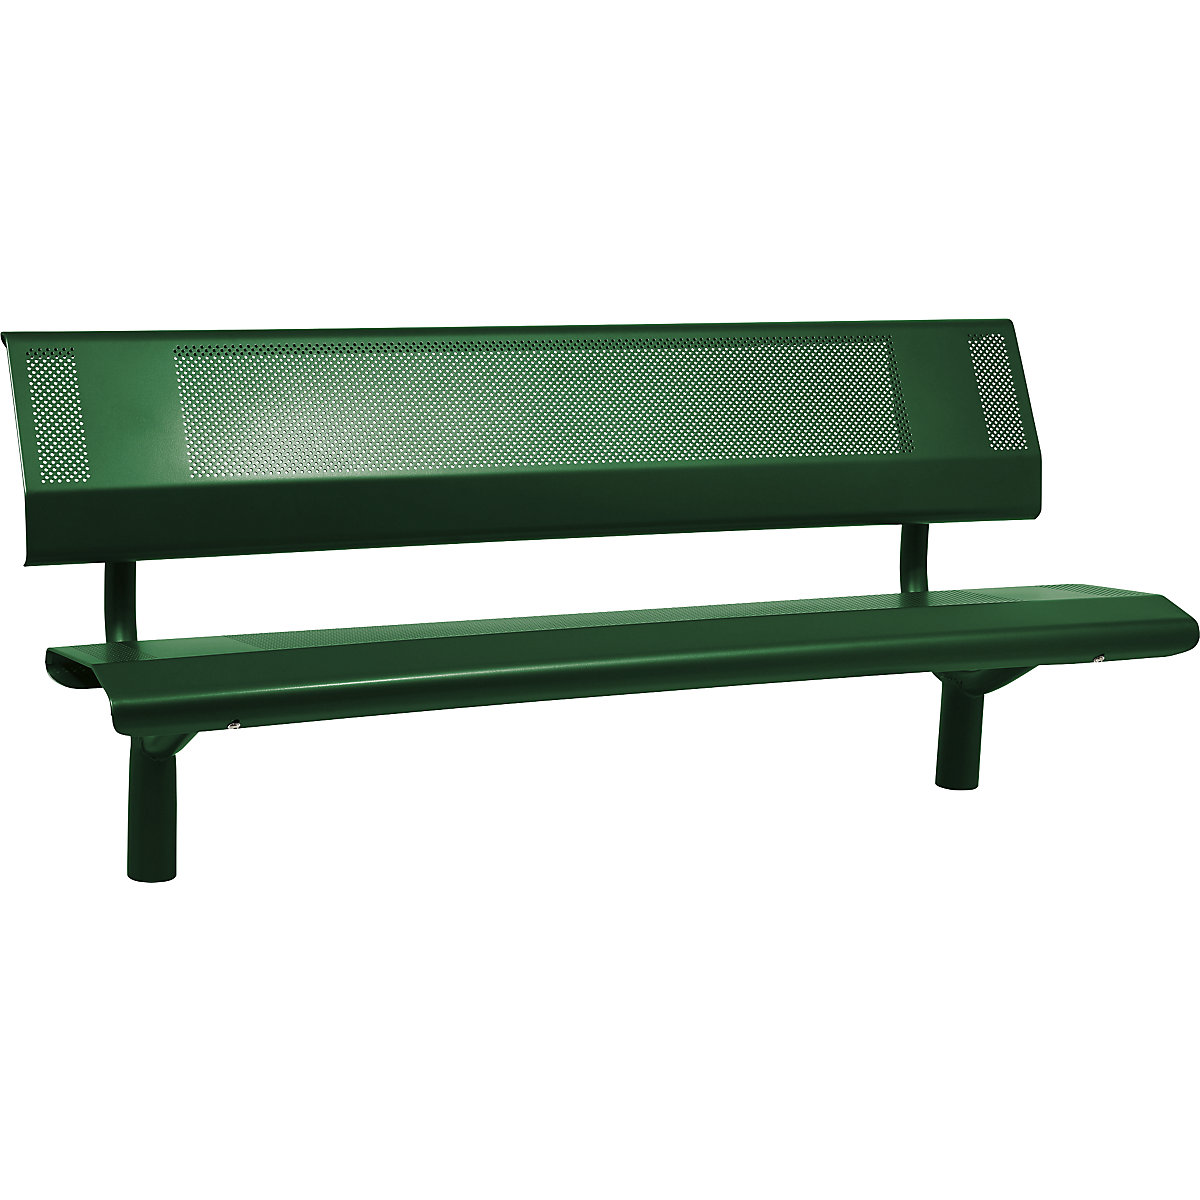 Jeklena klop OSLO – PROCITY, višina sedeža 450 mm, dolžina 1800 mm, mahovo zelene barve, s hrbtnim naslonjalom-6